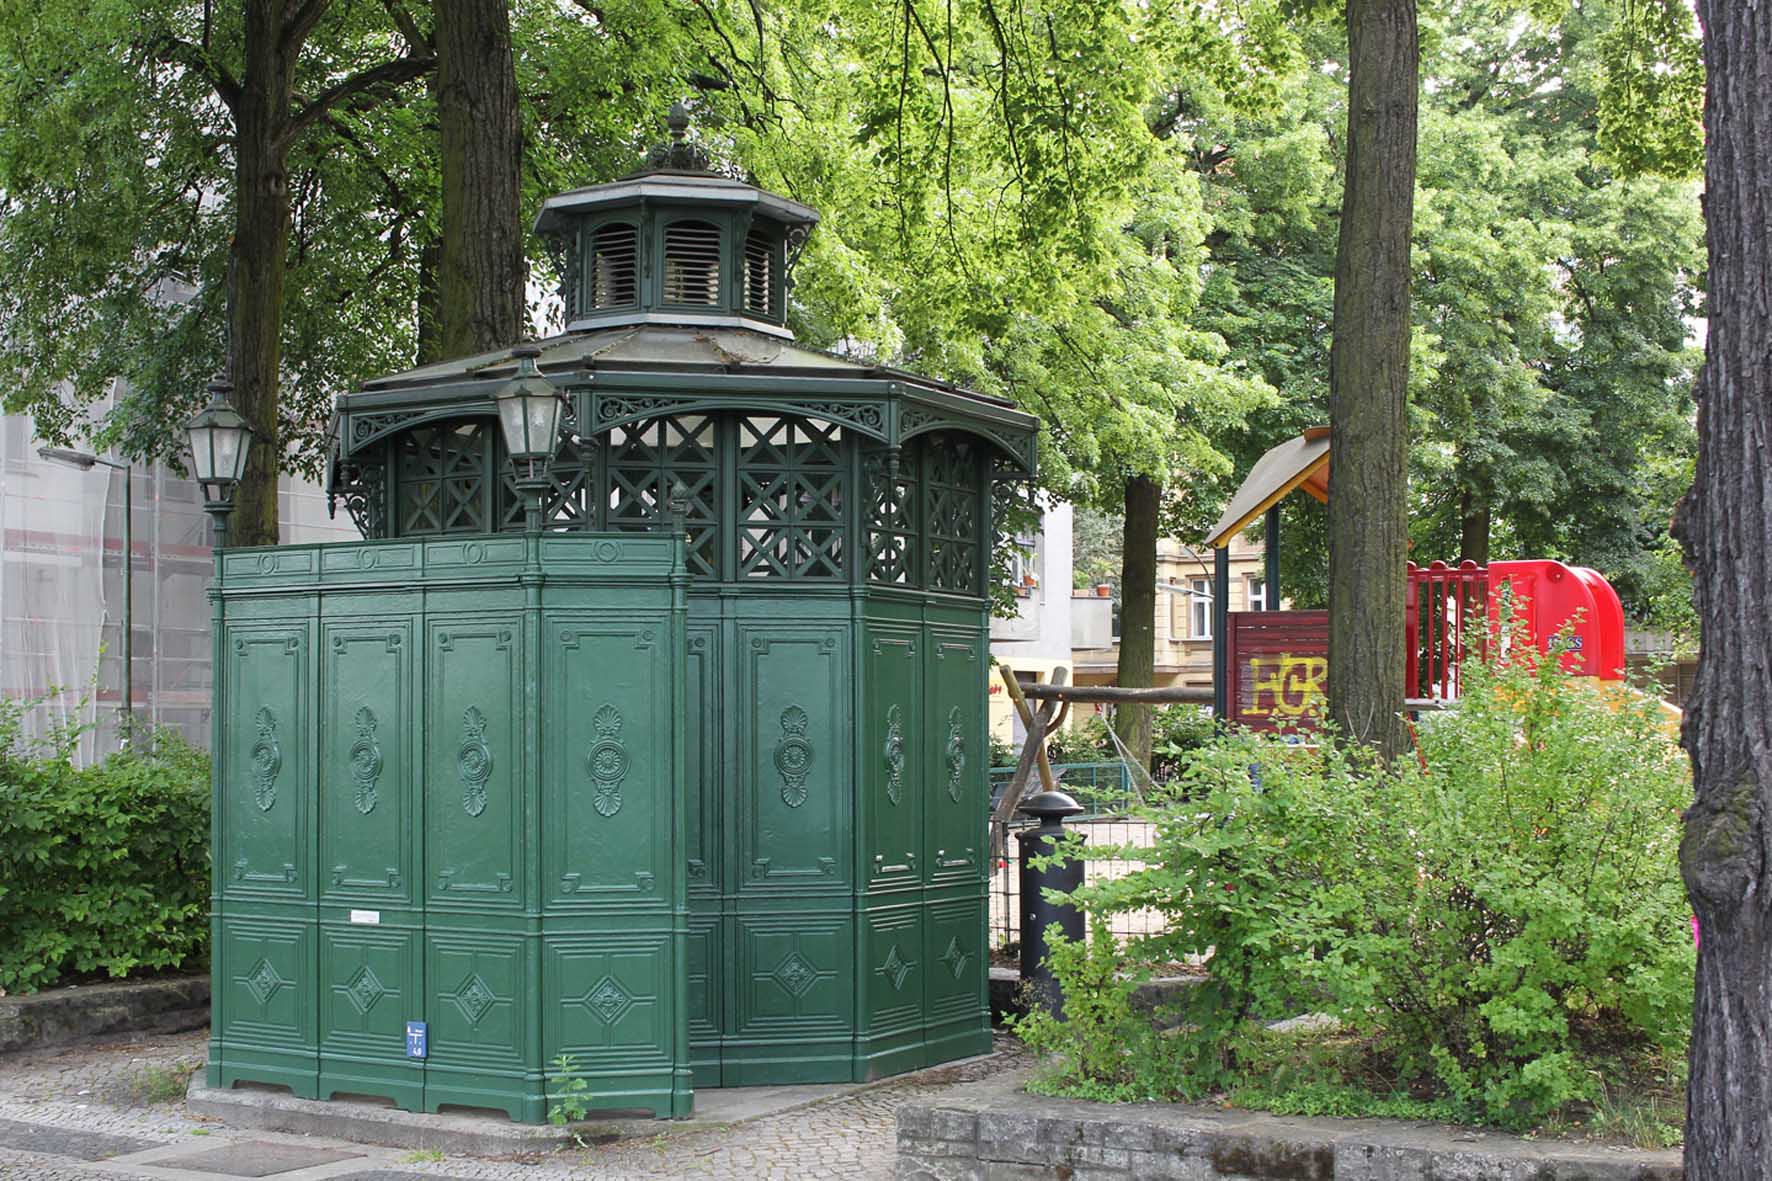 Café Achteck - Leuthener Platz - an example of Berlin's classic 19th century green cast iron public toilets